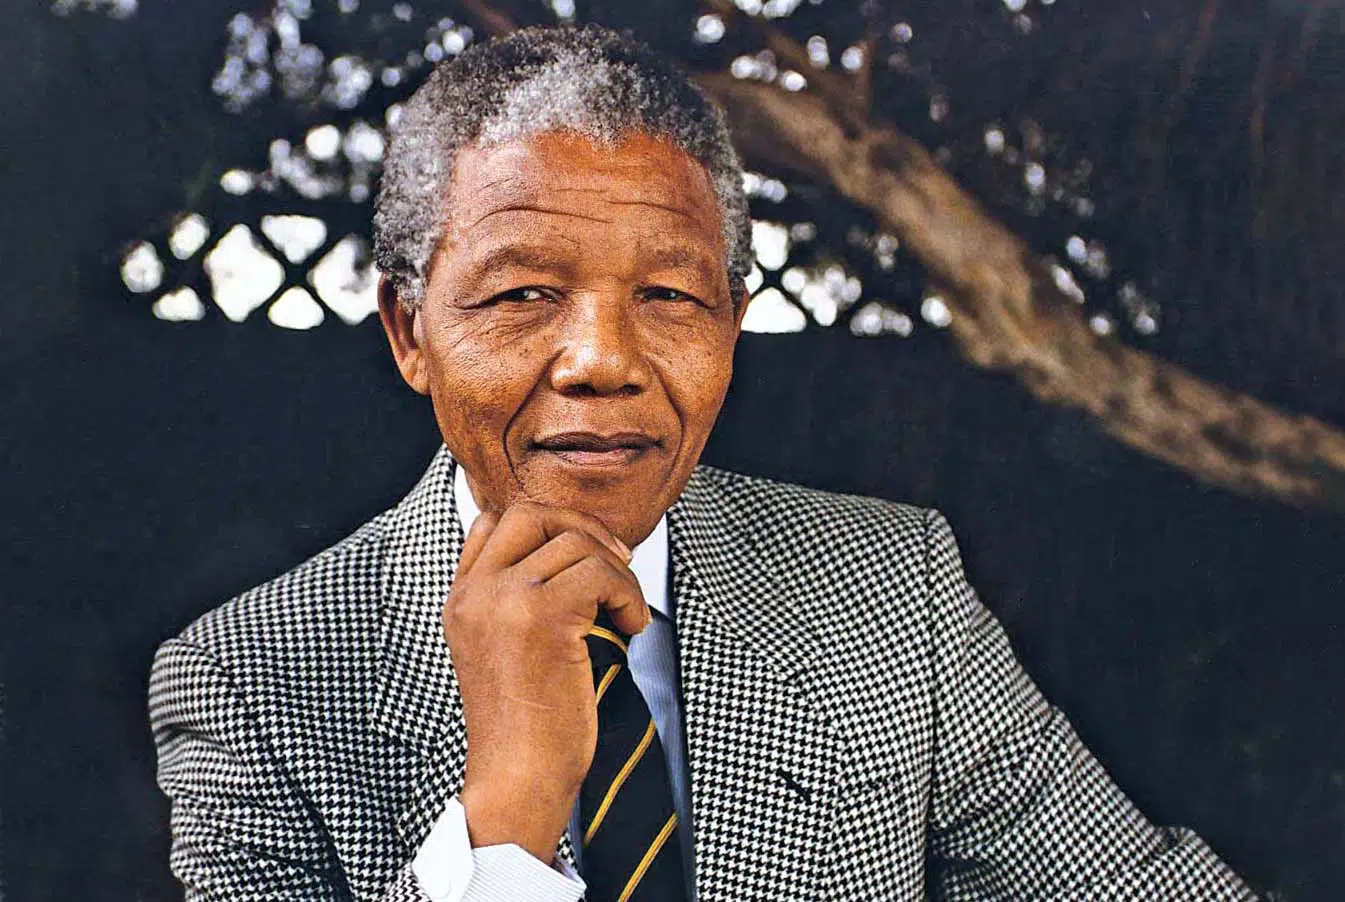 Las 8 características imprescindibles que debe poseer un buen líder político, según Nelson Mandela